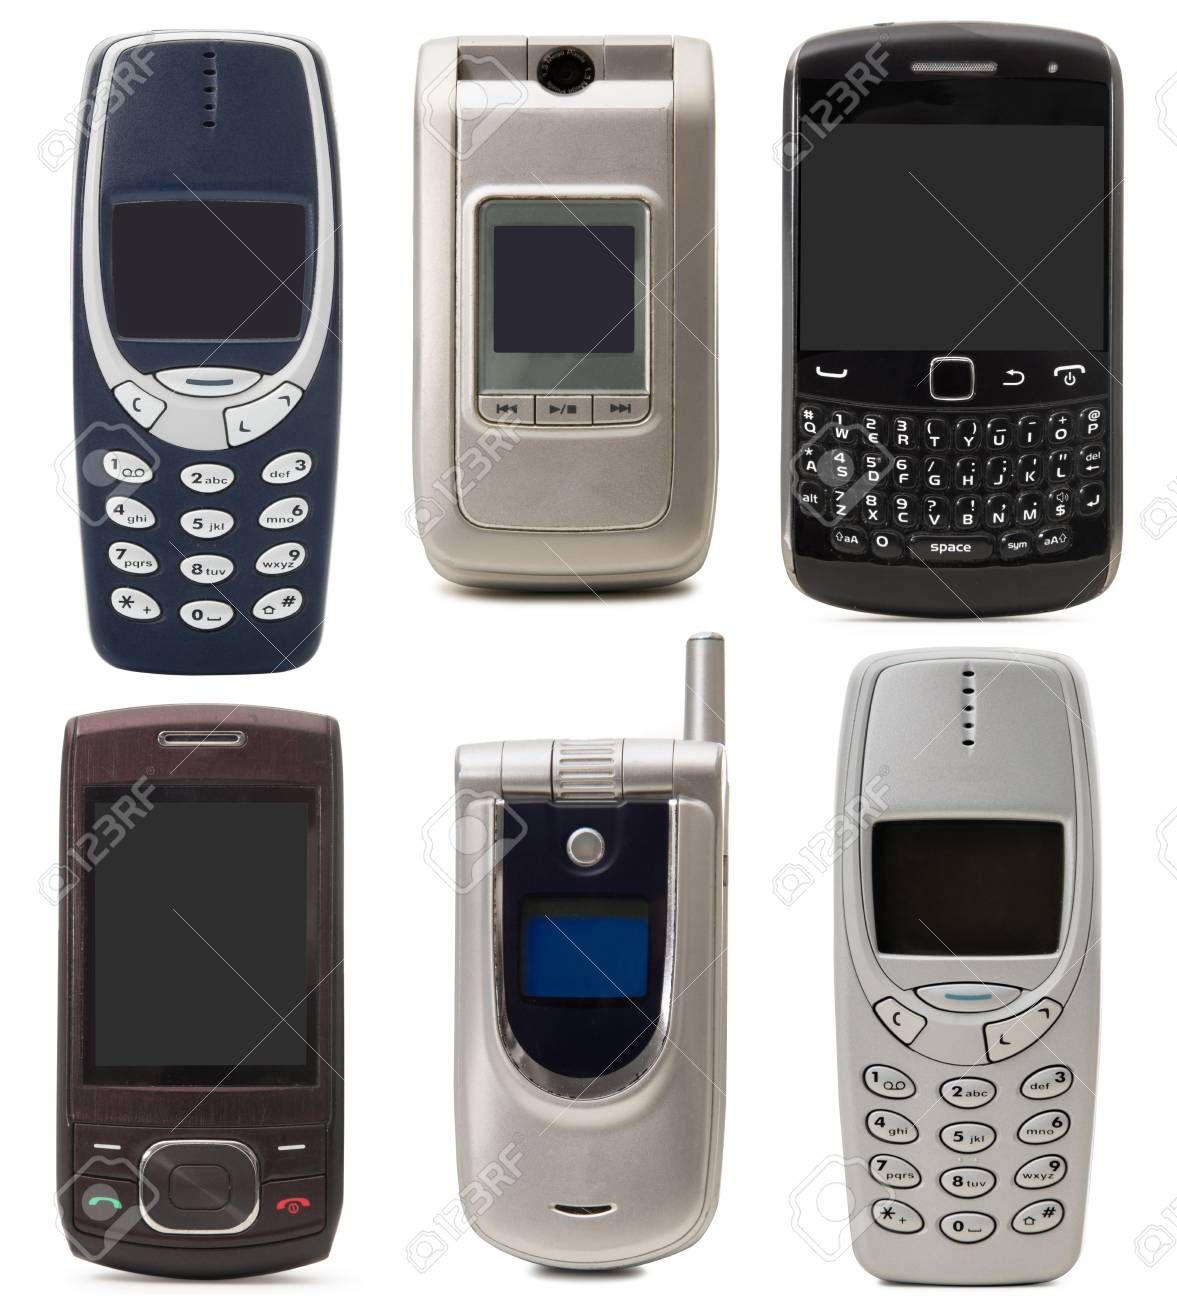 Telefonos obsoletos